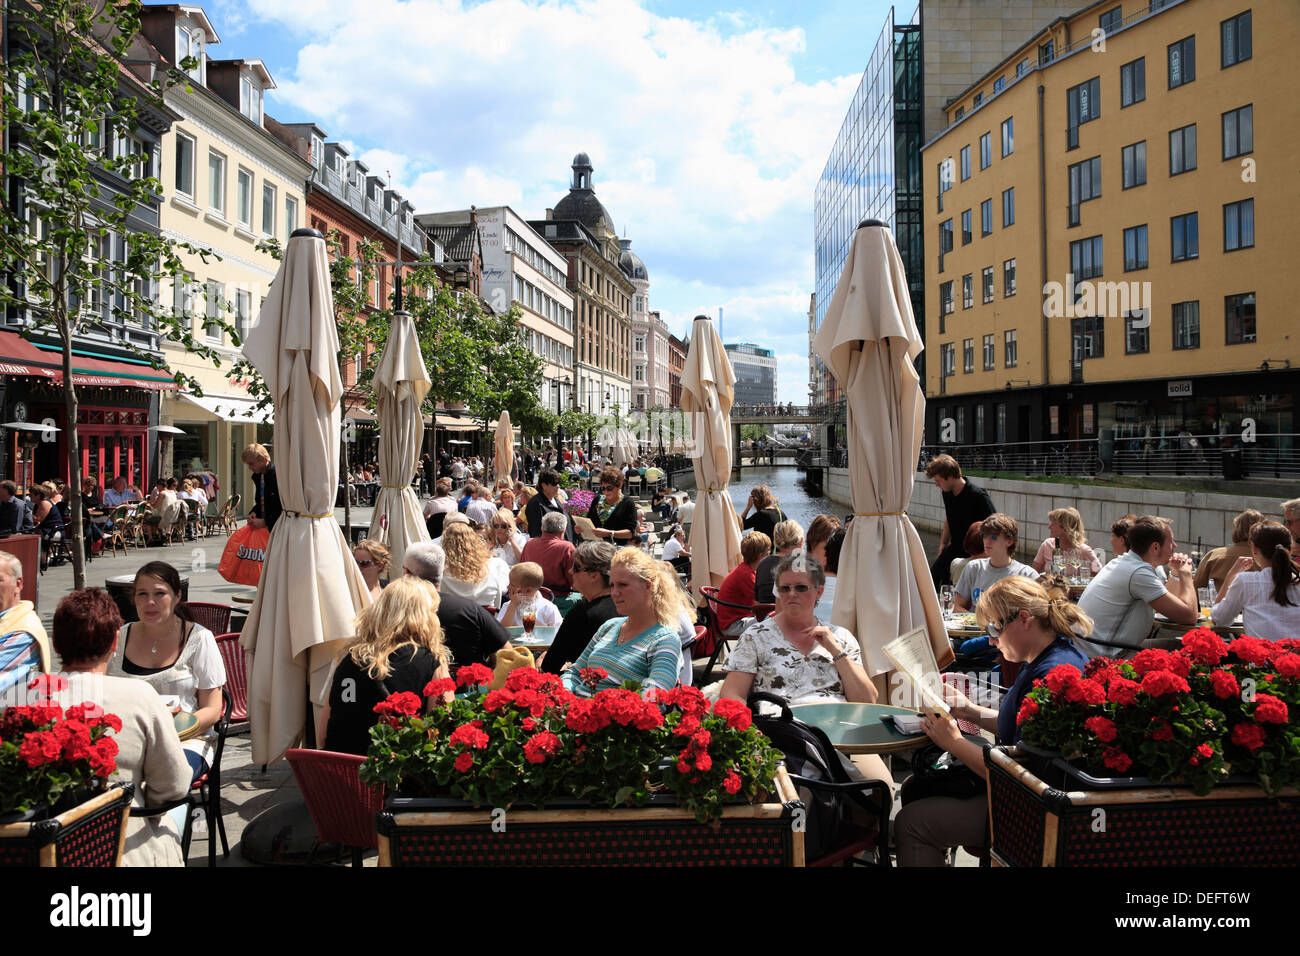 Sidewalk Cafe at  Aboulevarden, Arhus, Jutland, Denmark, Scandinavia, Europe Stock Photo